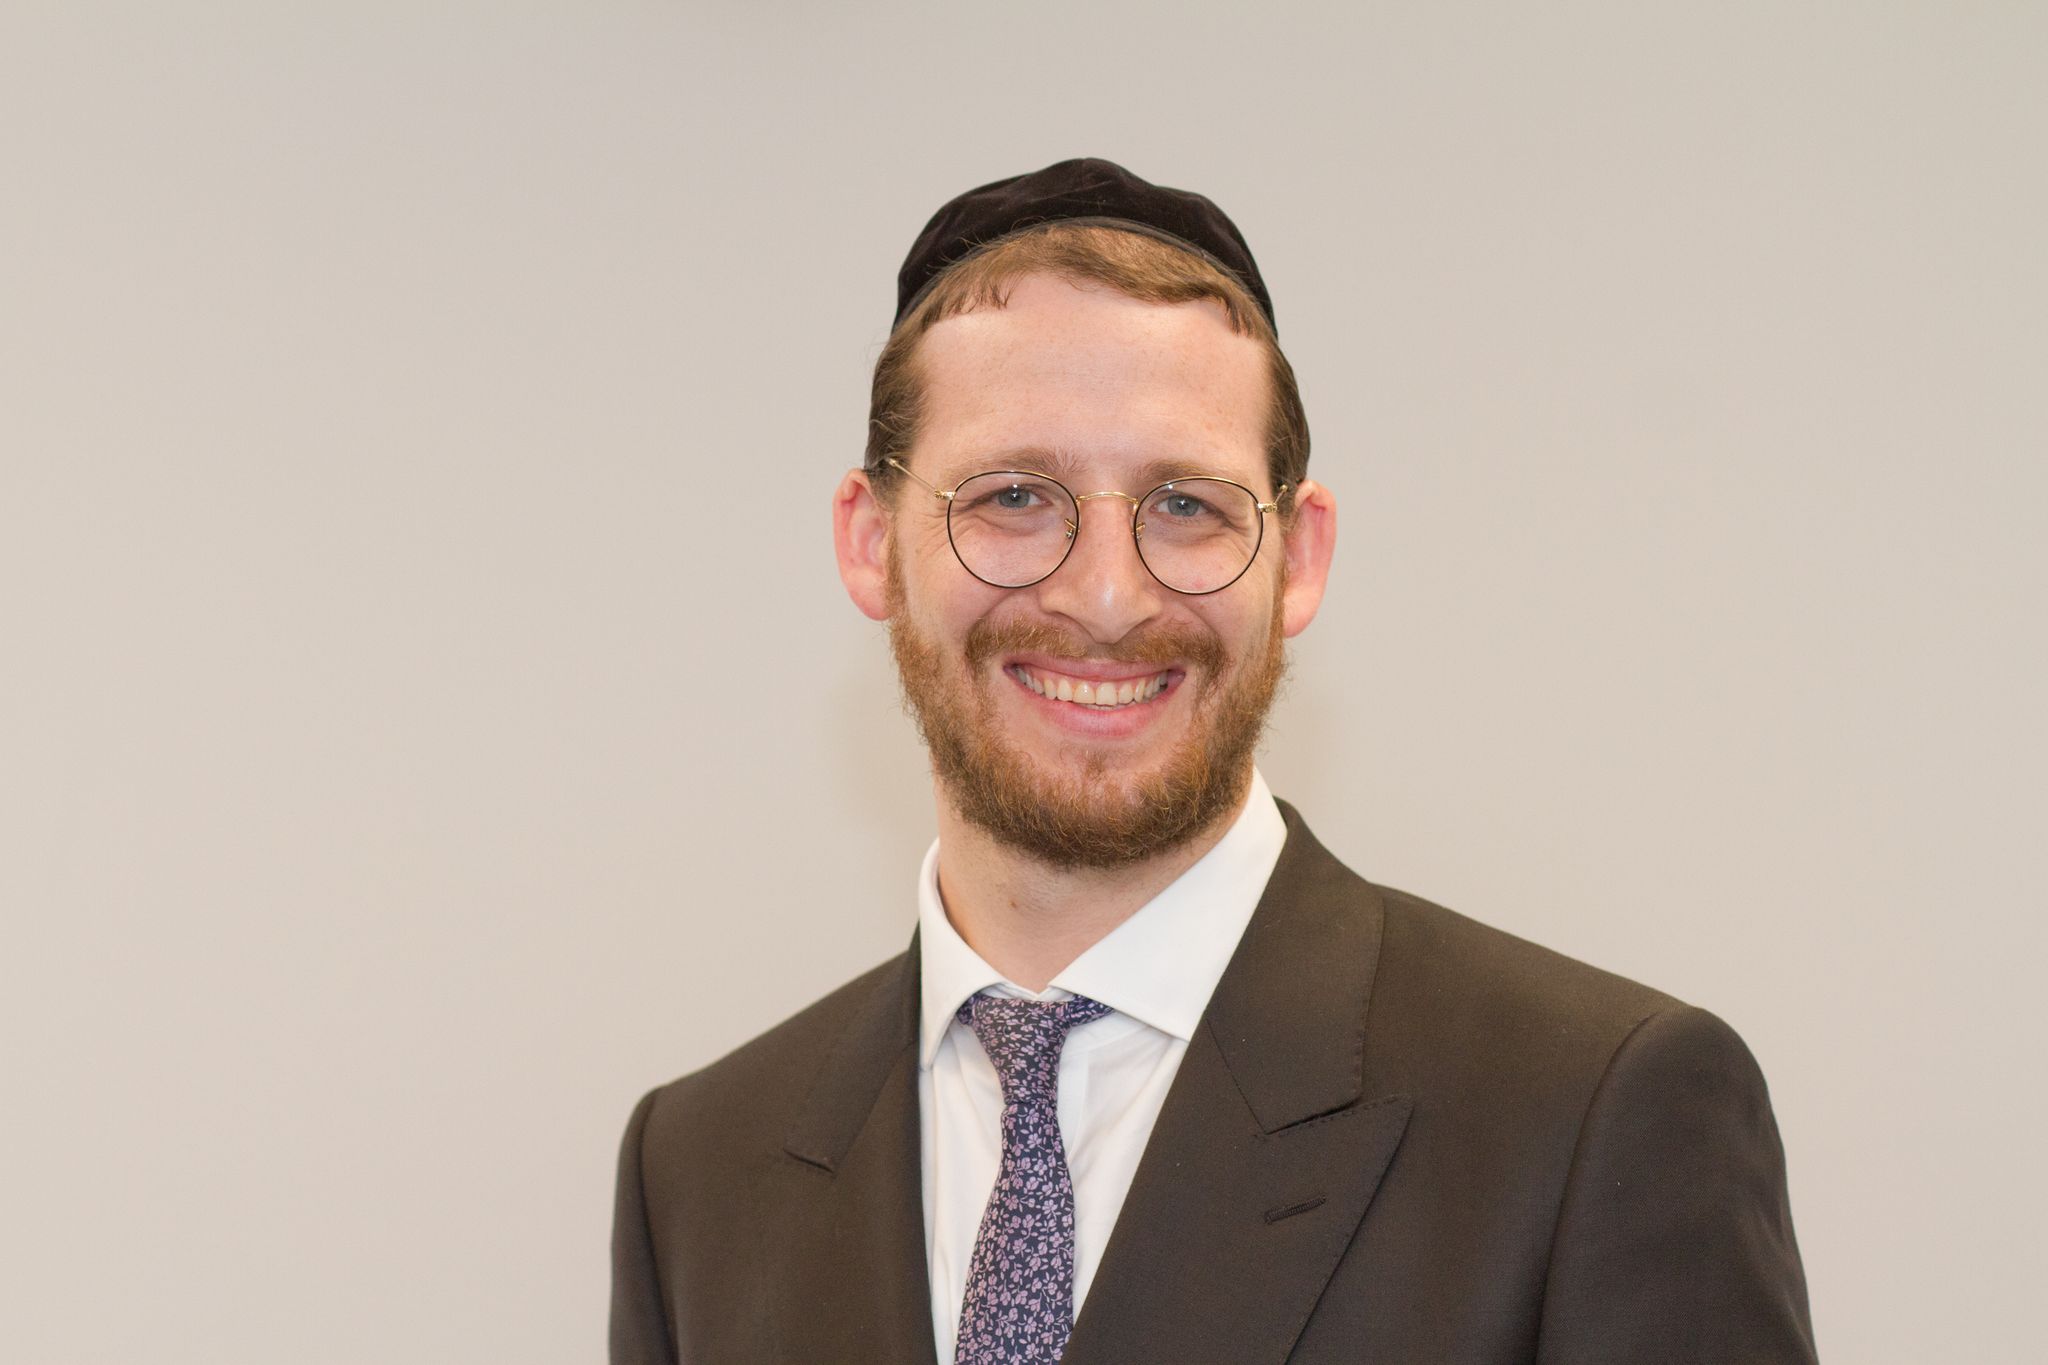 Rabbi Fuchs